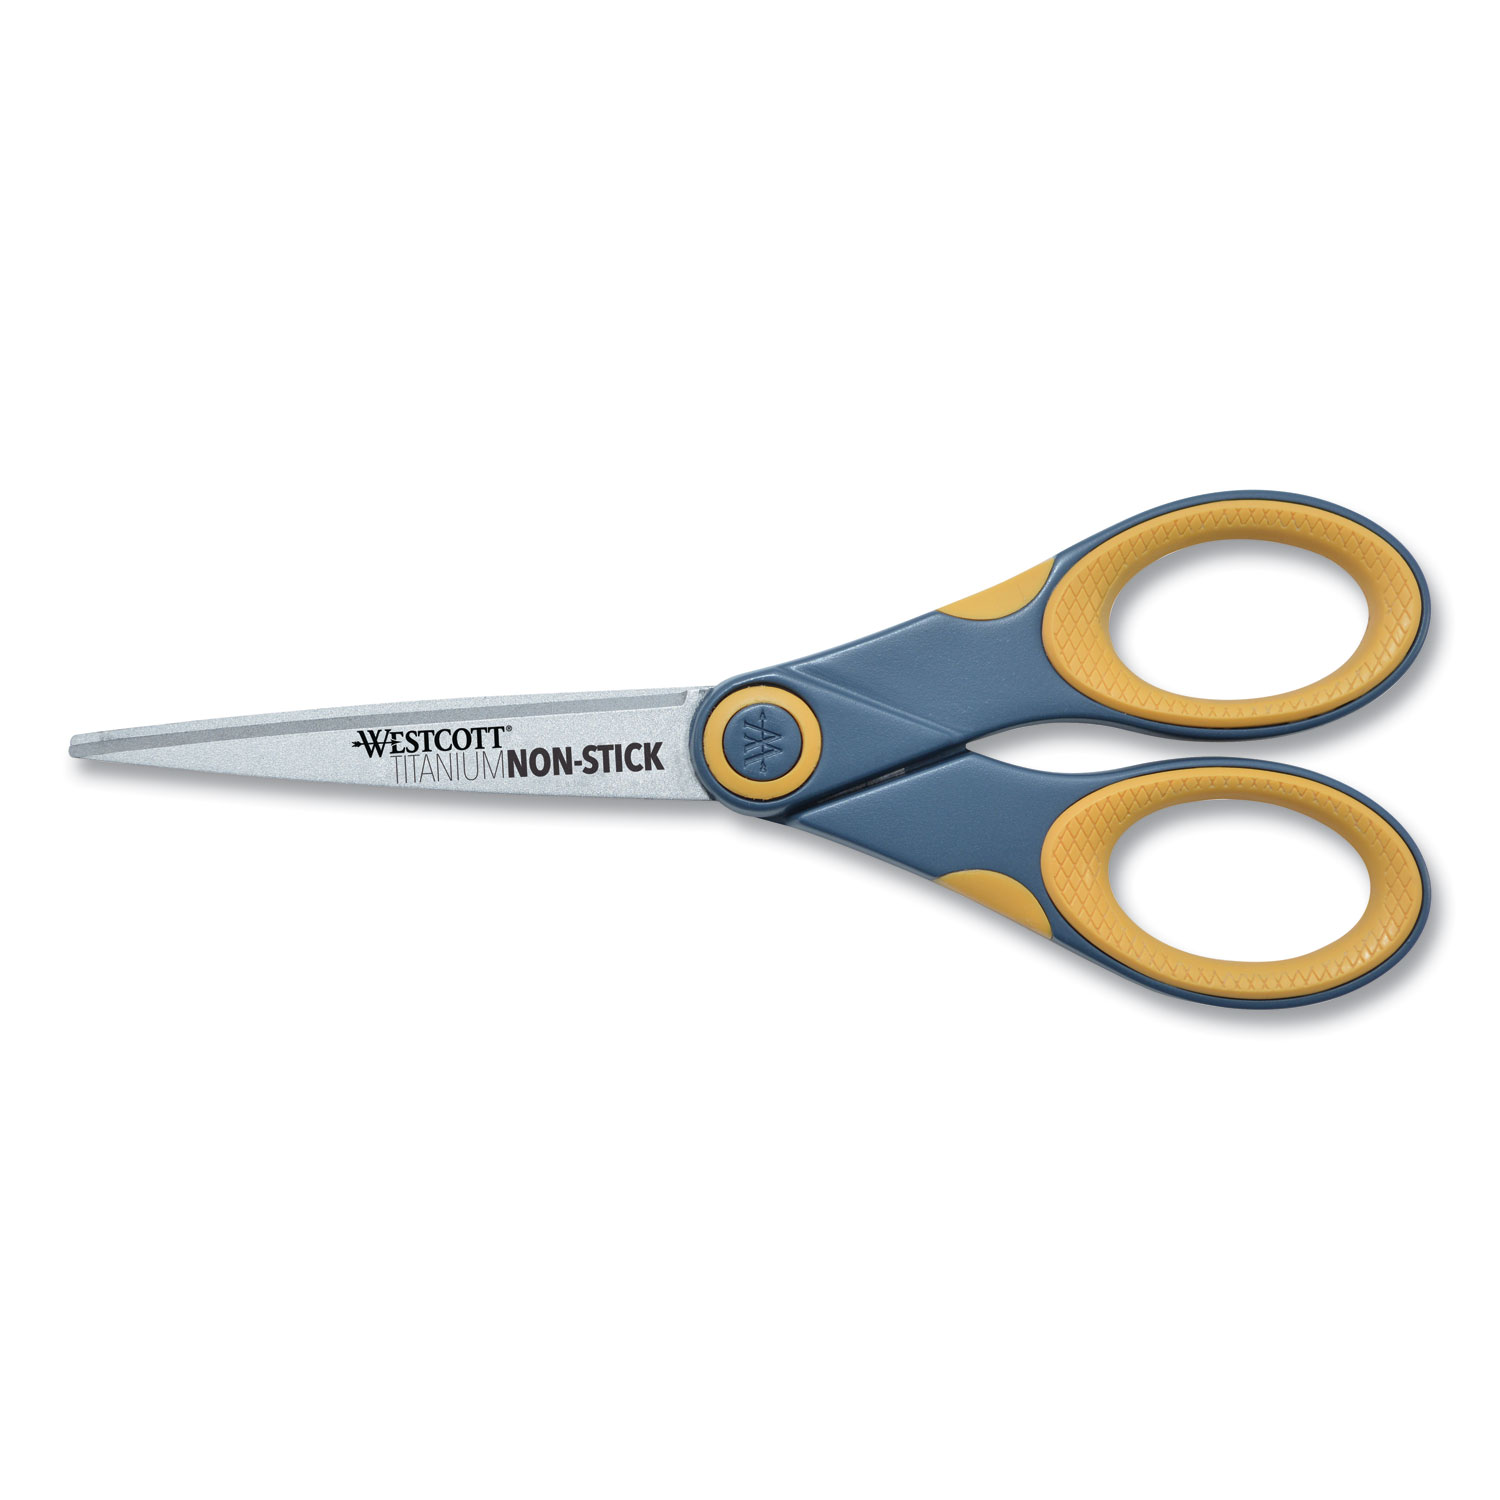  Westcott 14851 Non-Stick Titanium Bonded Scissors, Pointed Tip, 7 Long, 3 Cut Length, Gray/Yellow Straight Handle (ACM14851) 